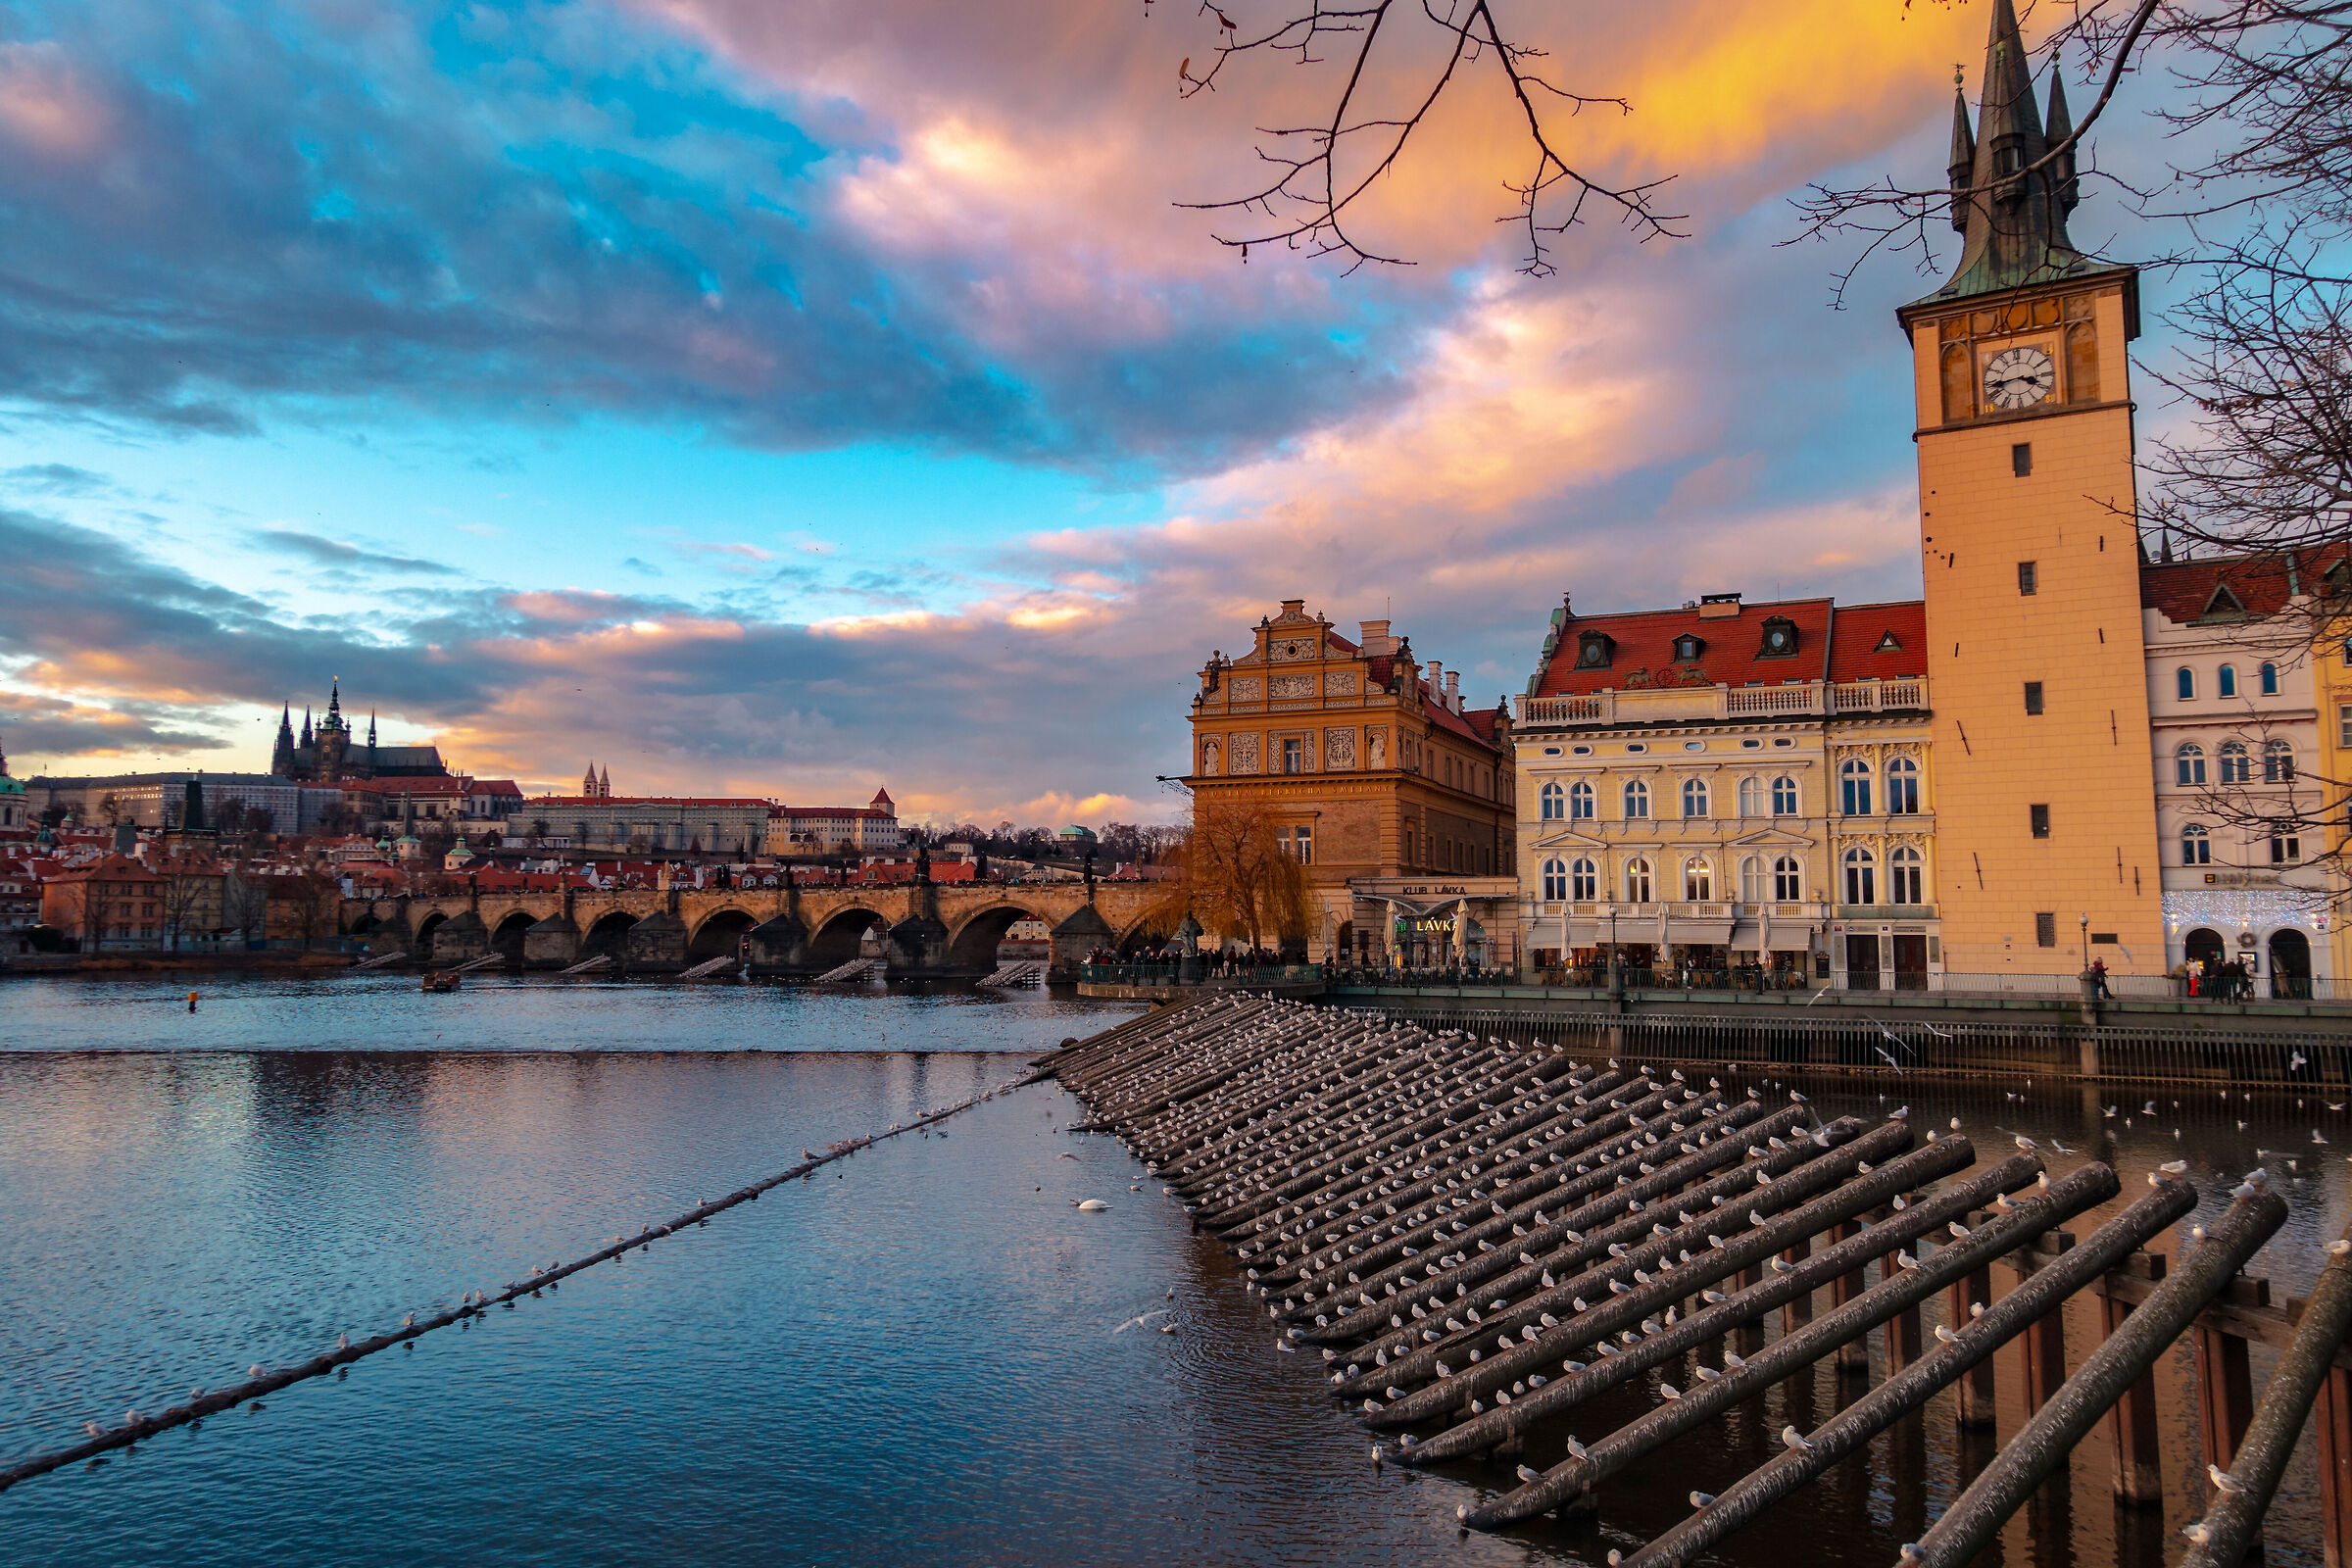 Prague vibes...